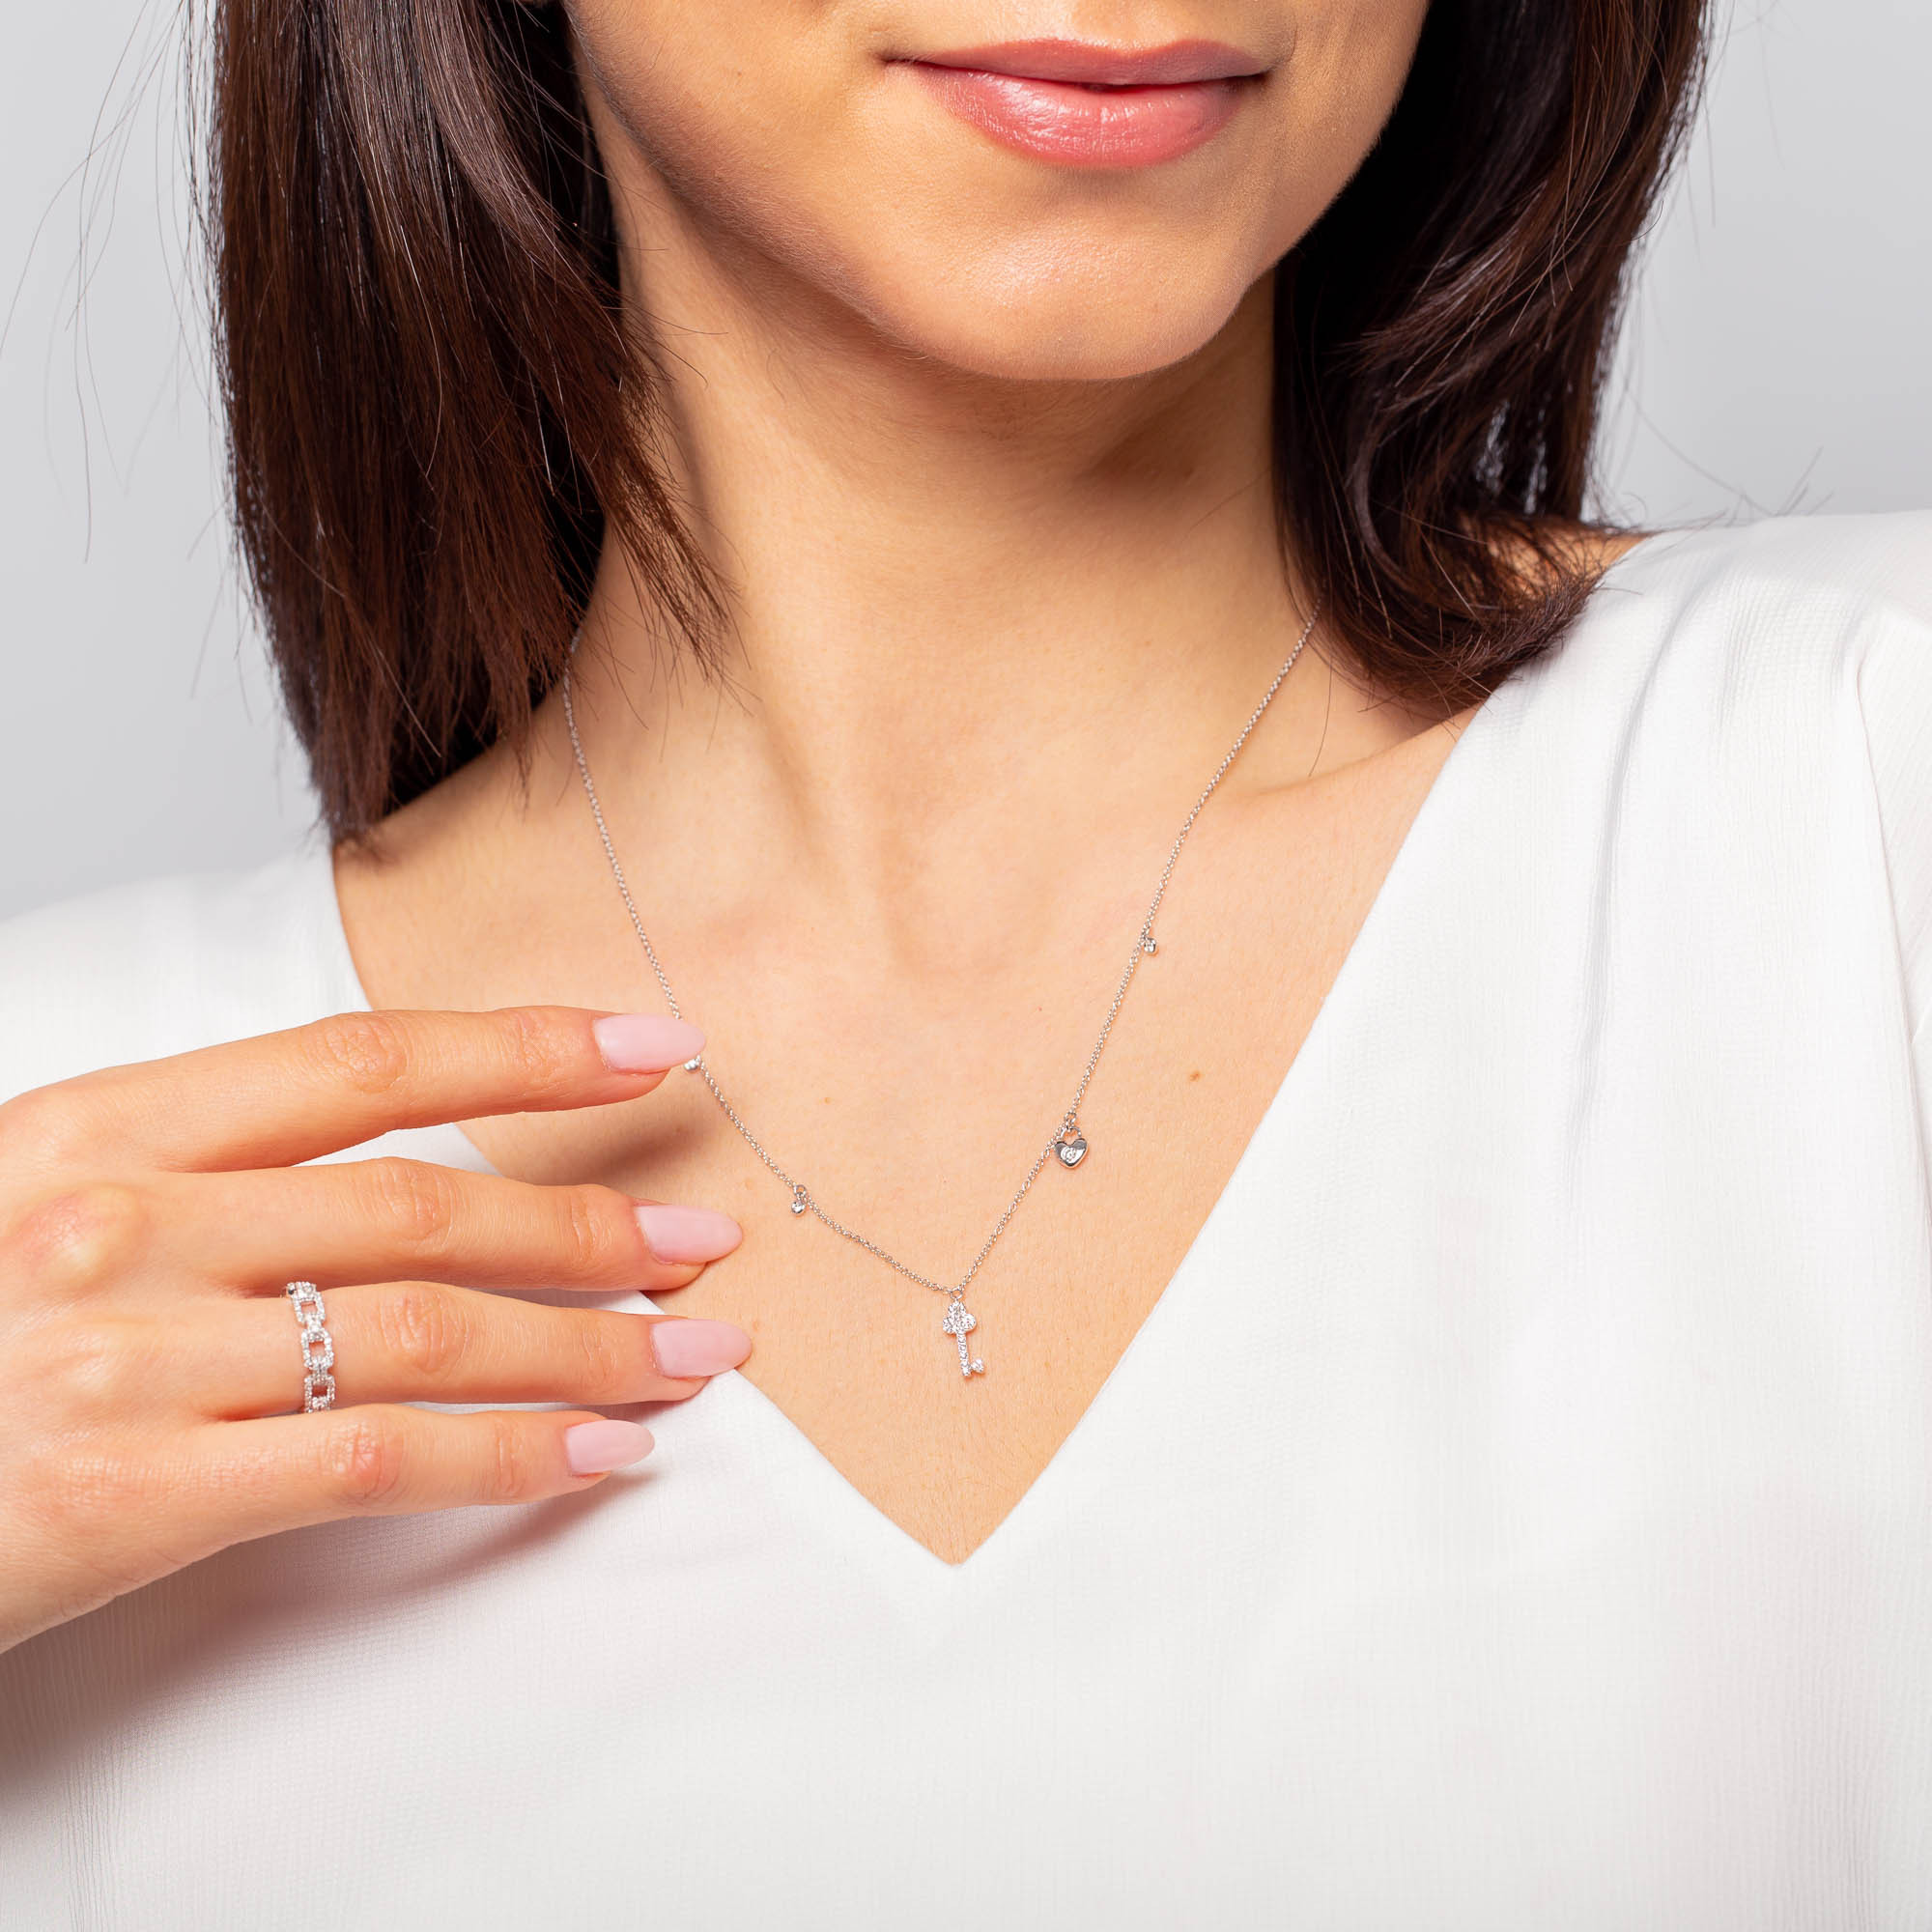 Diamond Key with Heart-Shape Lock Necklace | 14K White gold 2